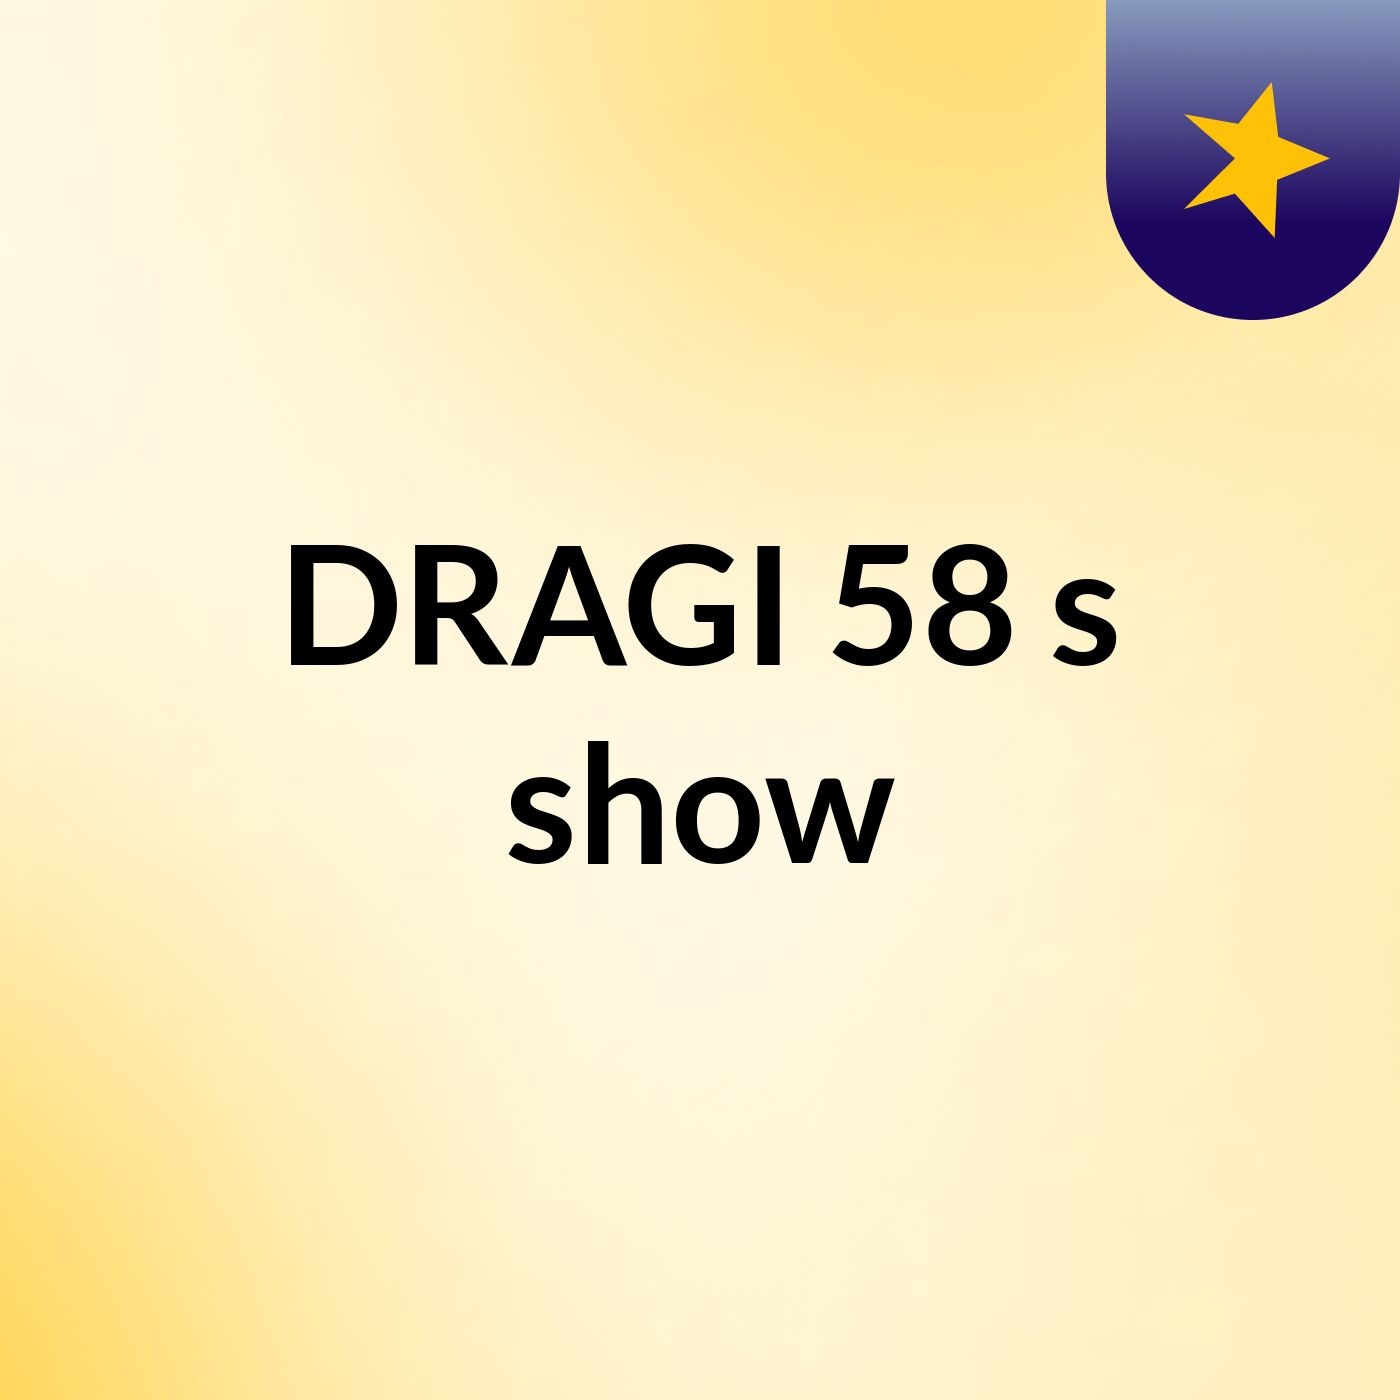 DRAGI 58's show